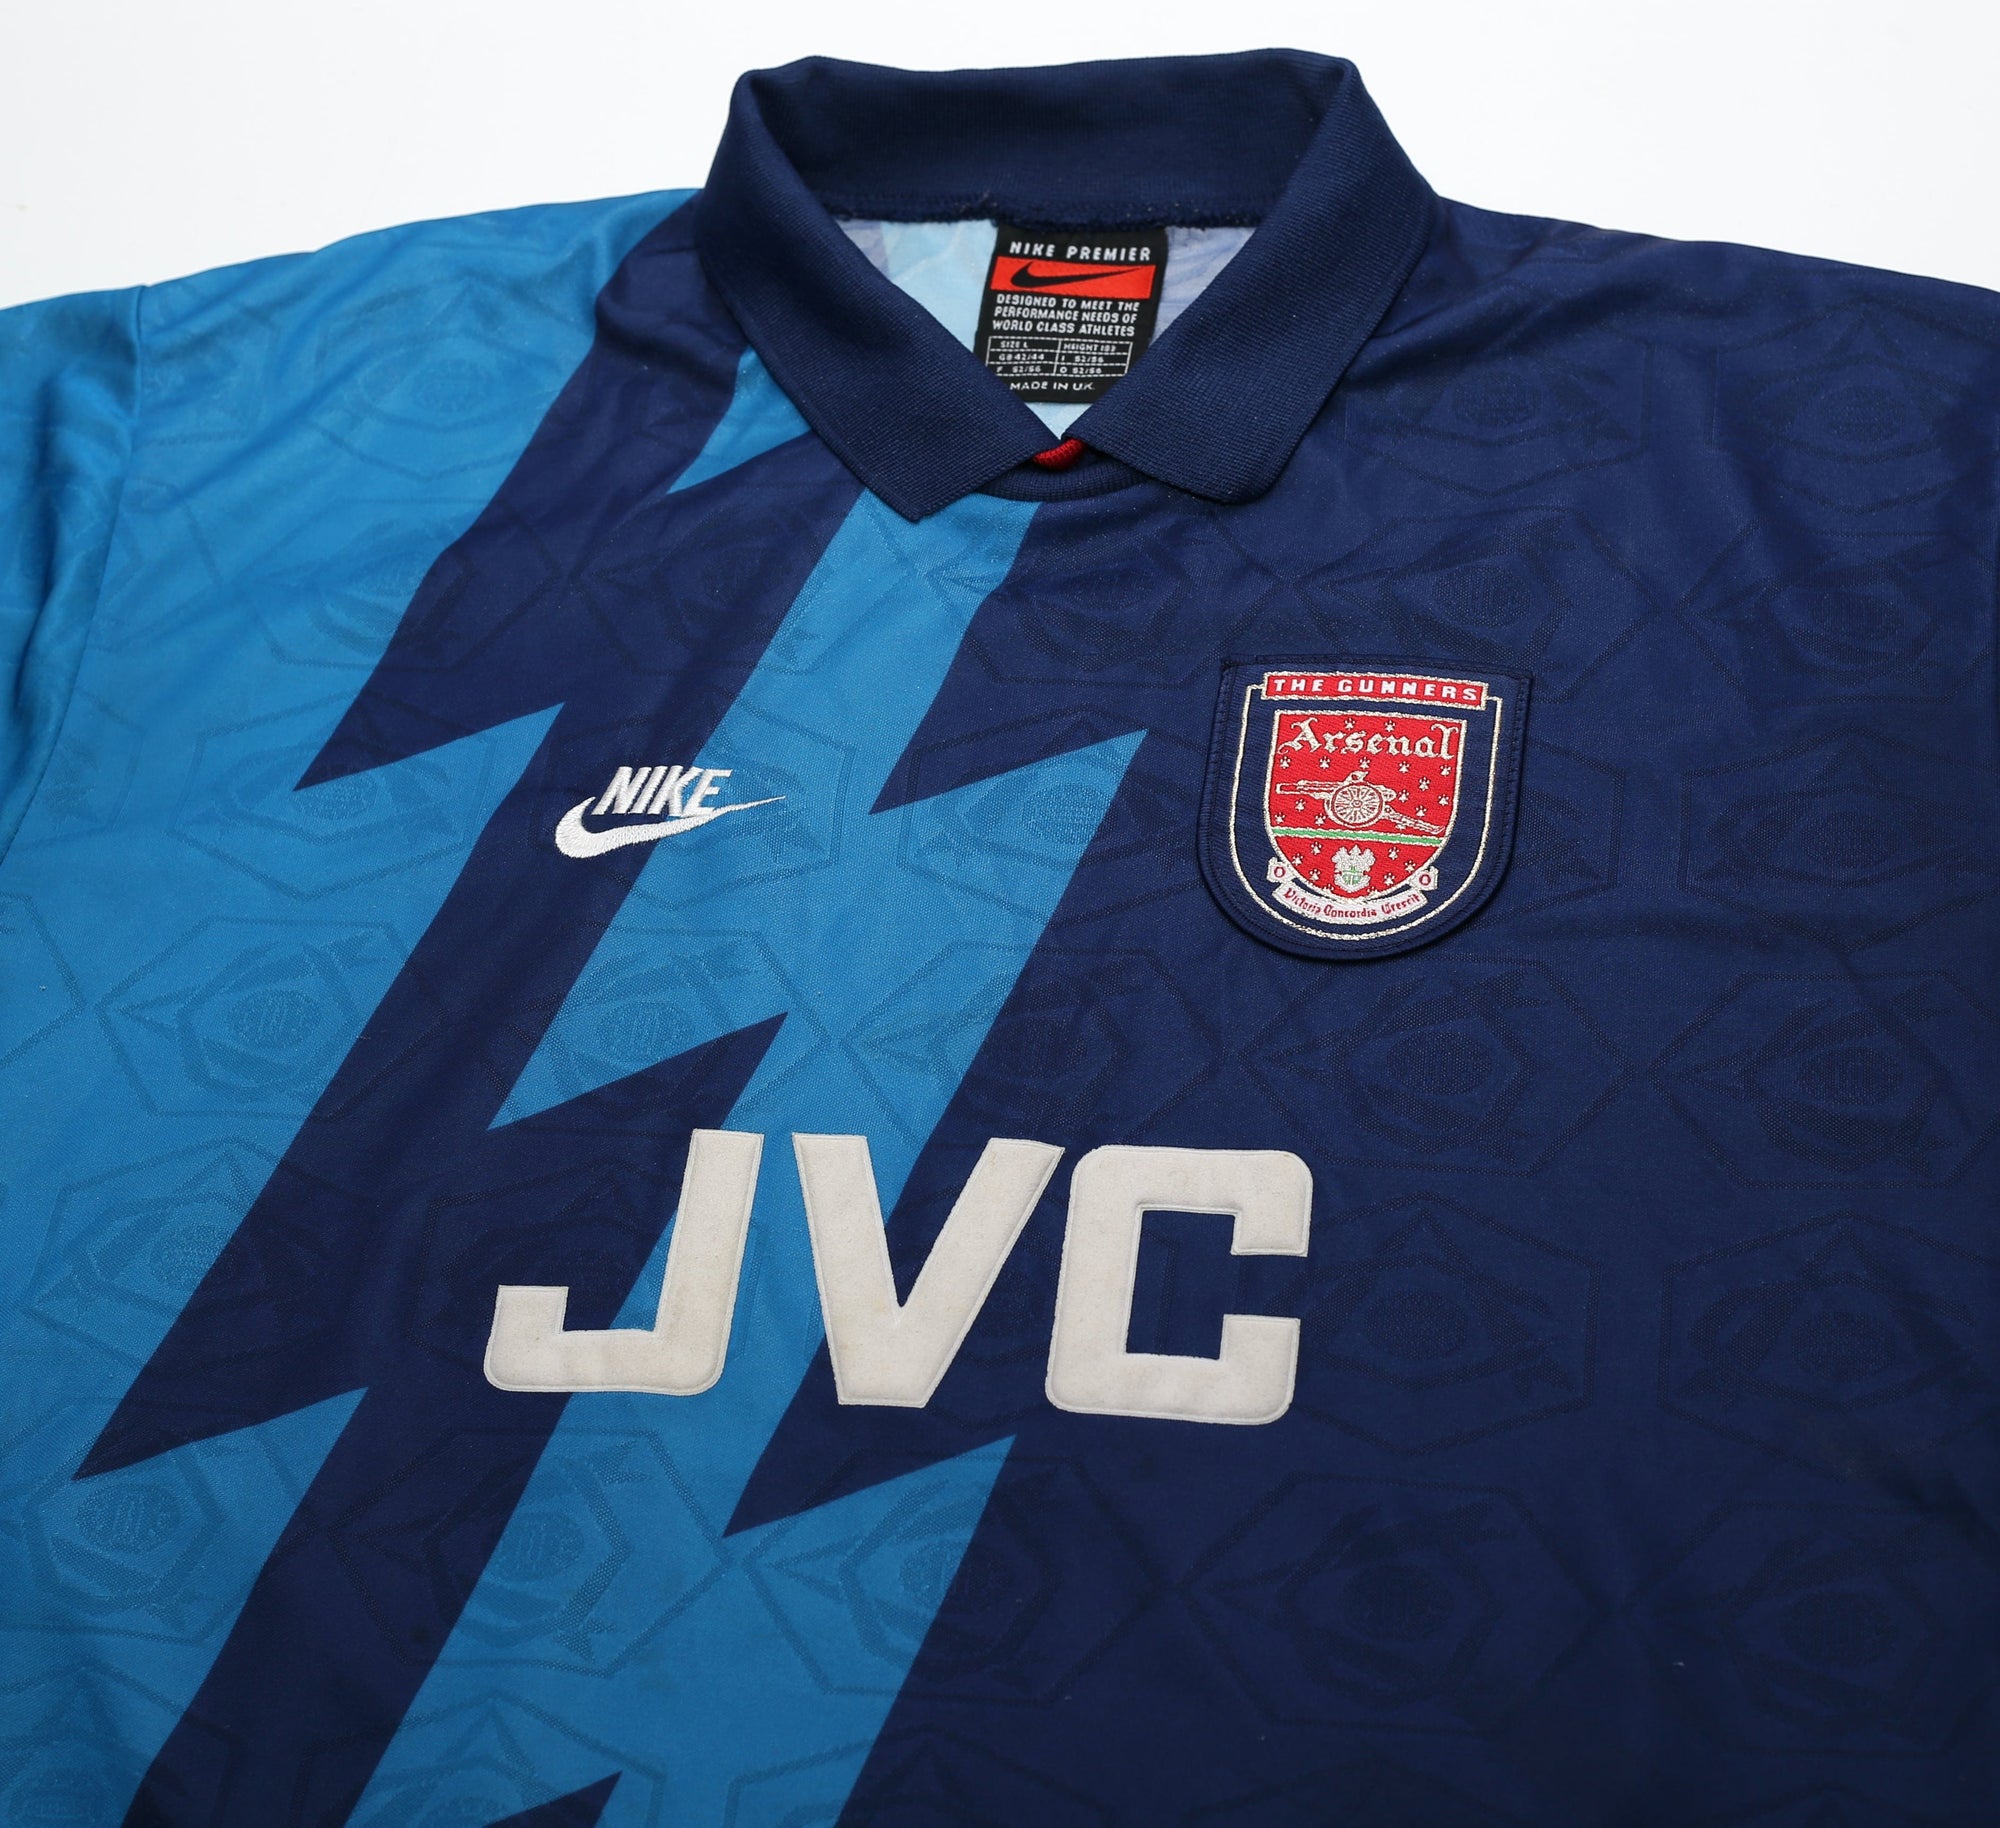 1995/96 BERGKAMP #10 Arsenal Nike Away Football Shirt (L)